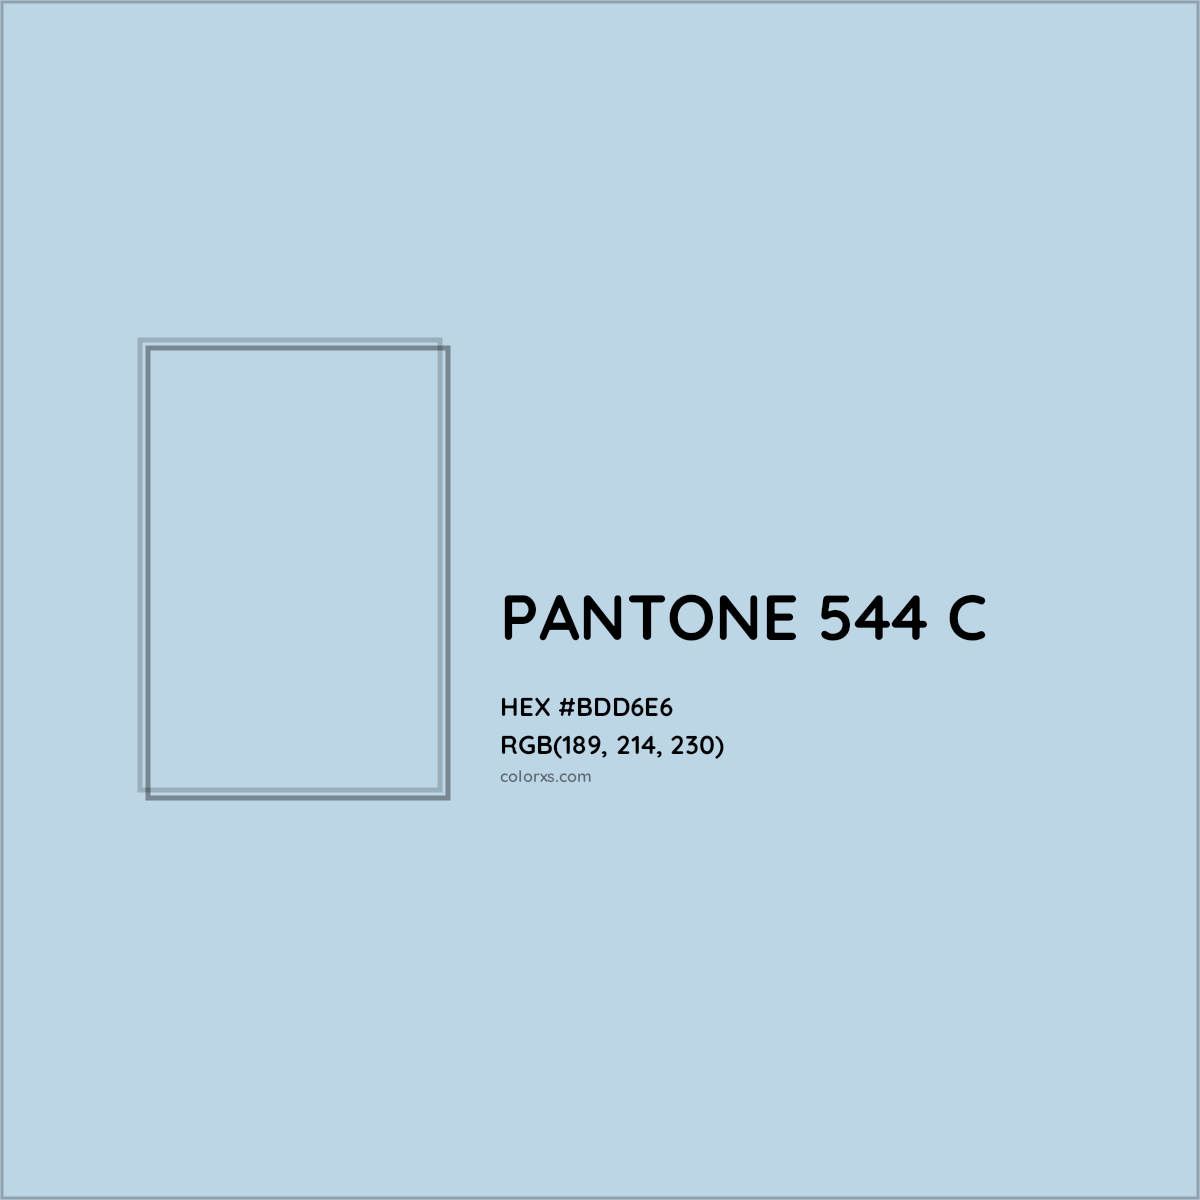 HEX #BDD6E6 PANTONE 544 C CMS Pantone PMS - Color Code